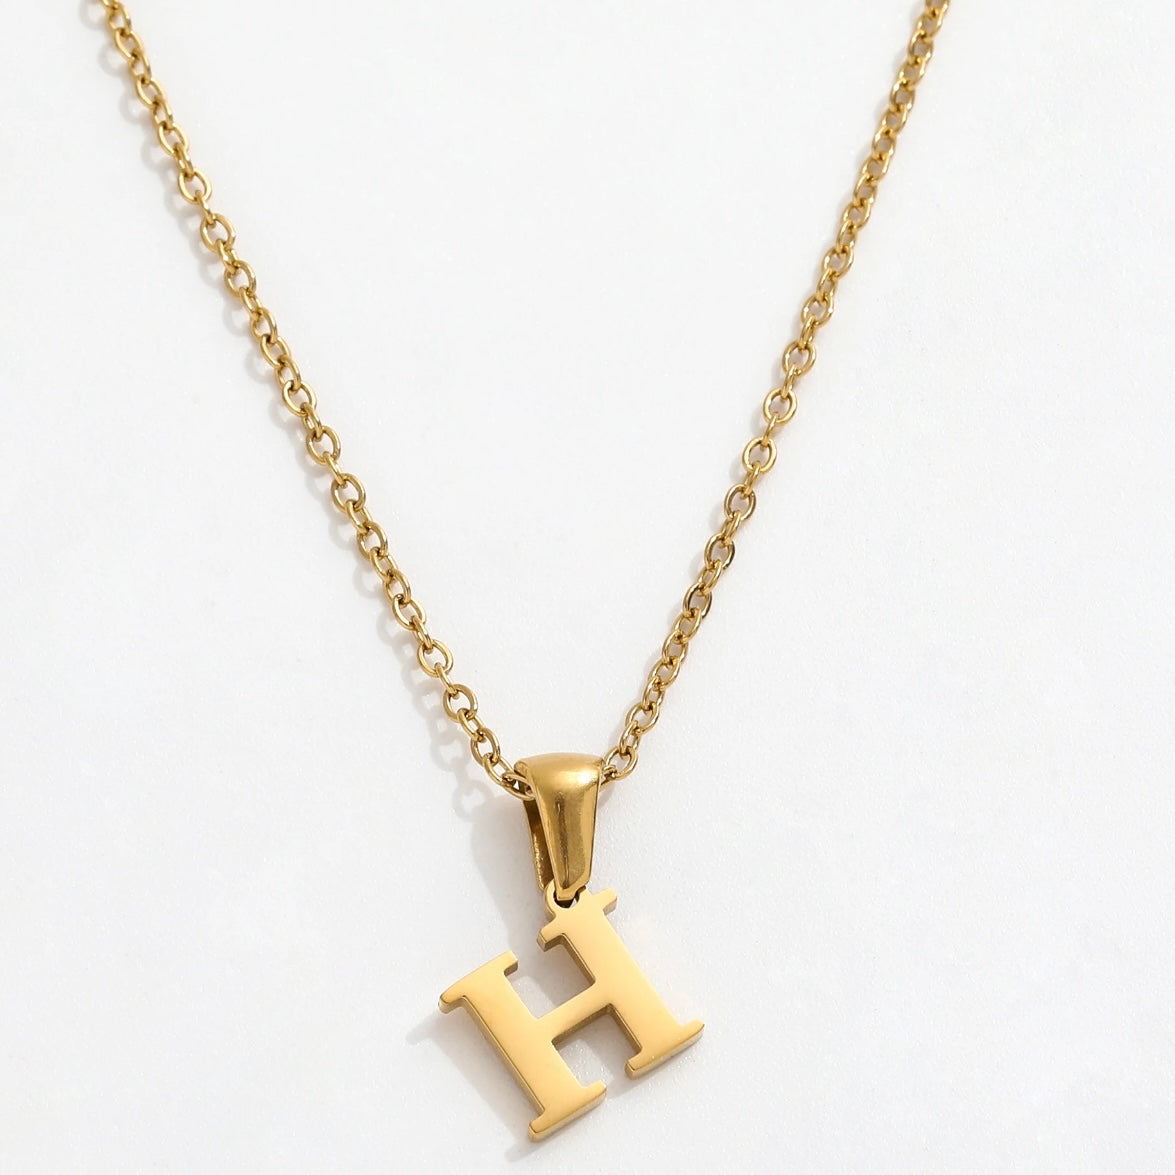 Gold Monogram Necklace